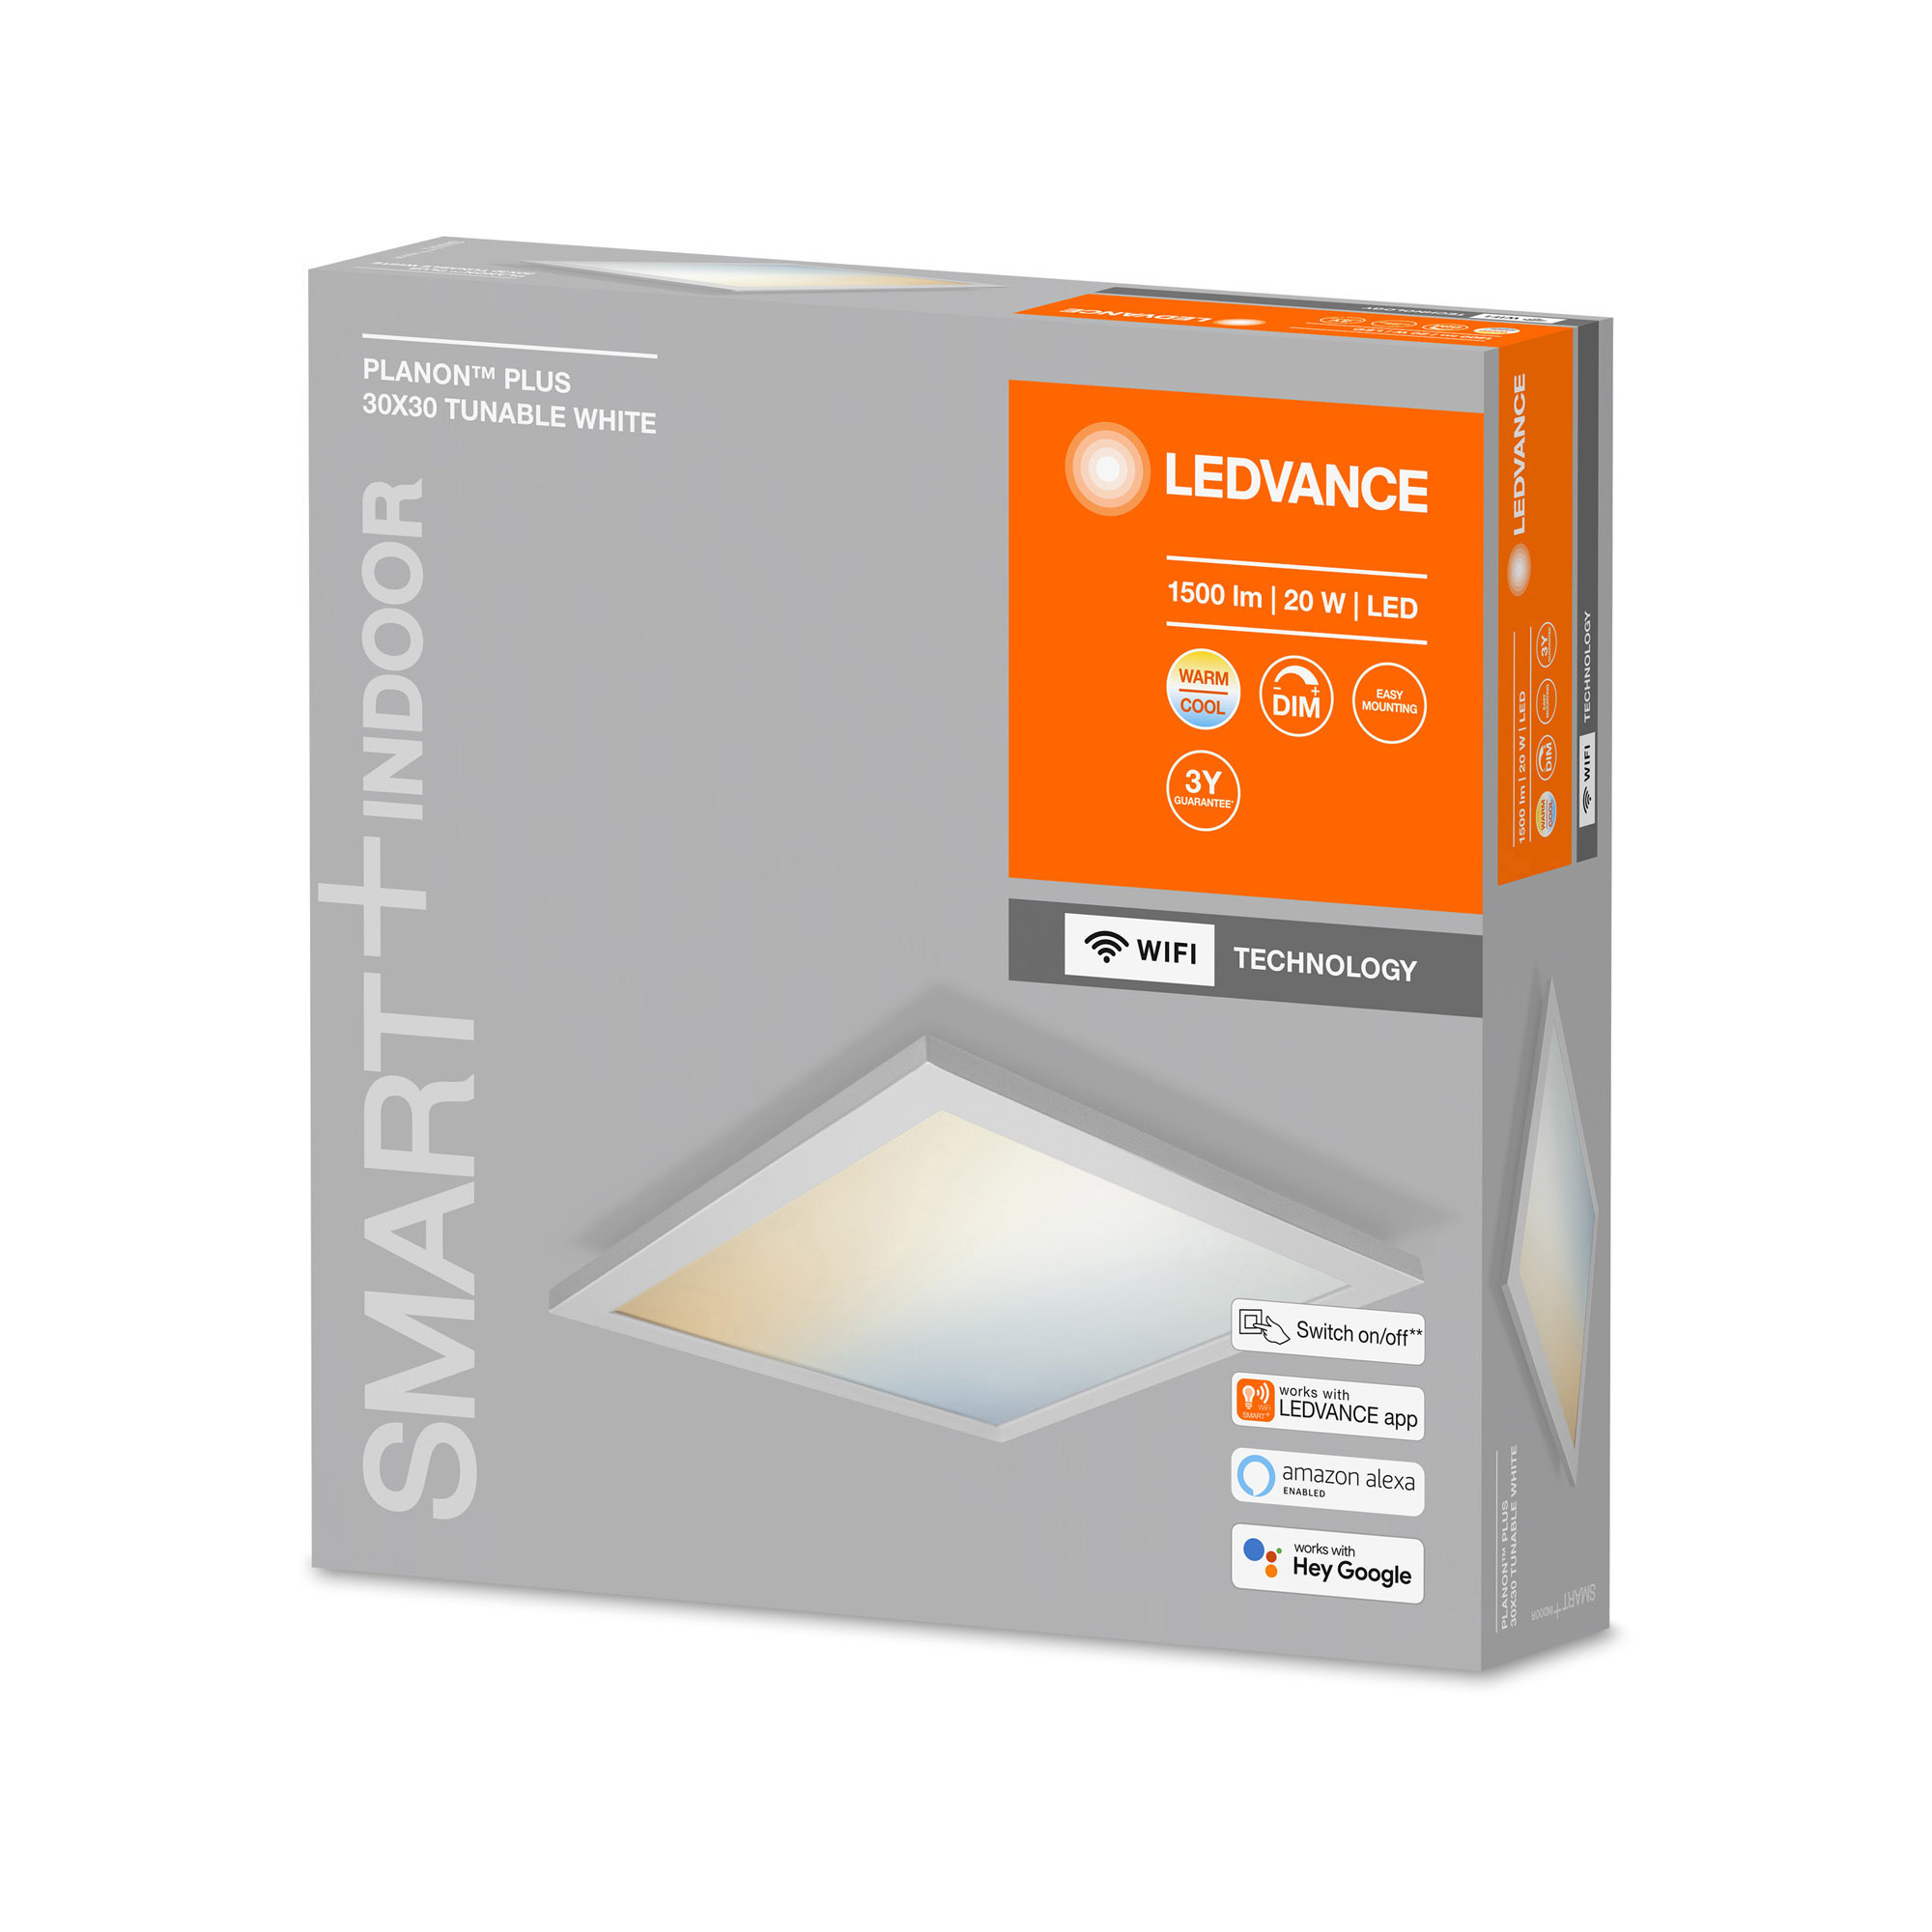 LEDVANCE SMART+ WiFi Tunable White LED Panel PLANON PLUS 30x30cm 1500lm